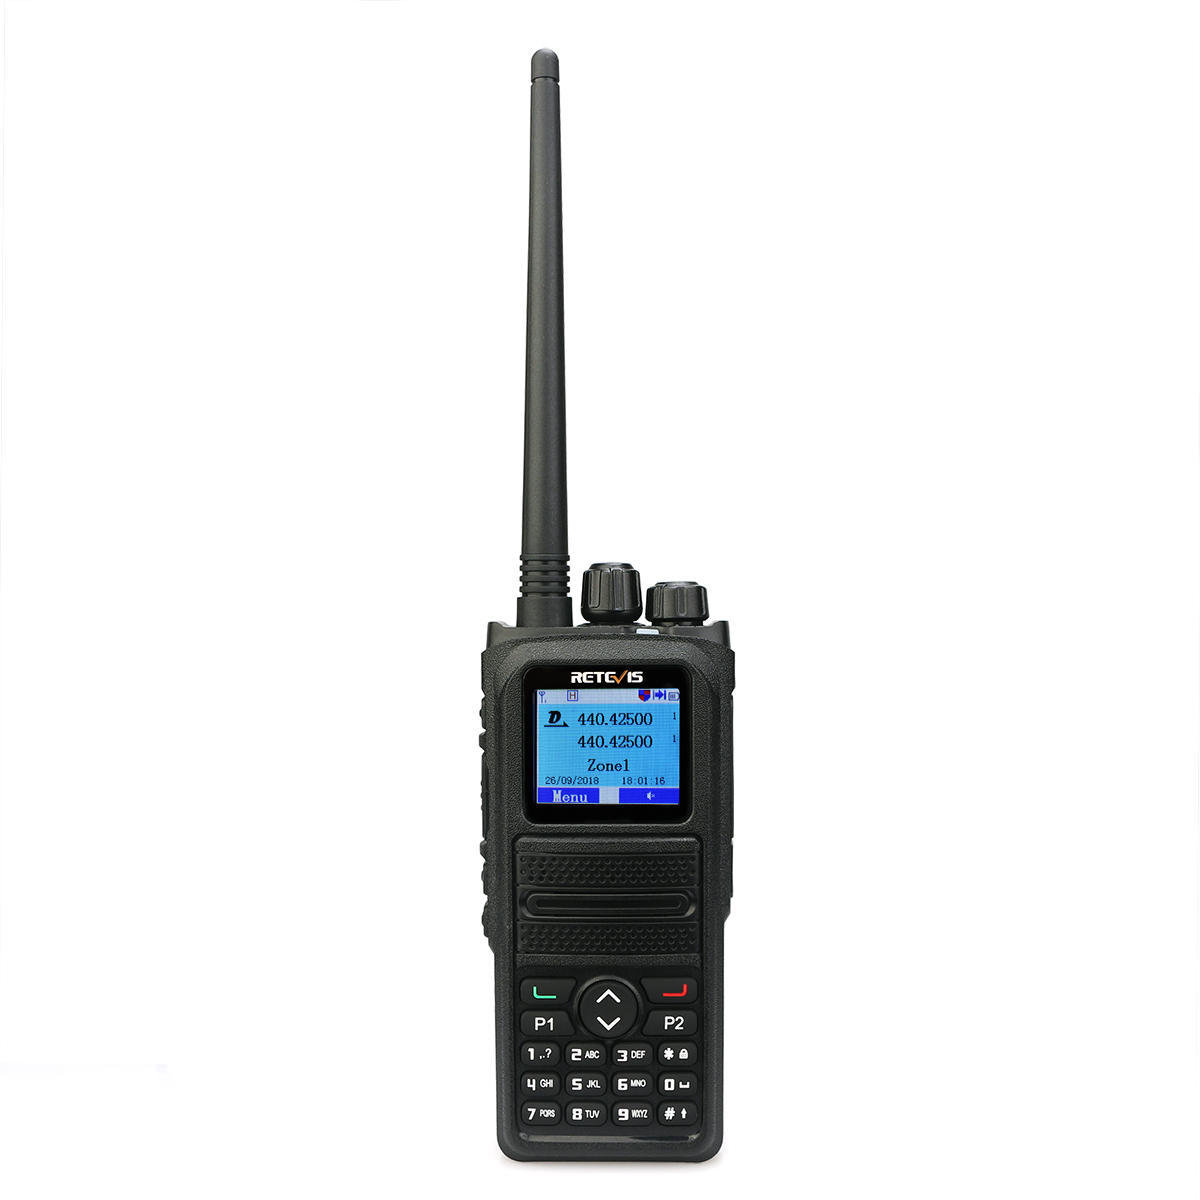 Retevis RT84 walkie talkie 5W Dual Band SMS,TDMA Digital/Analog Two Way DMR